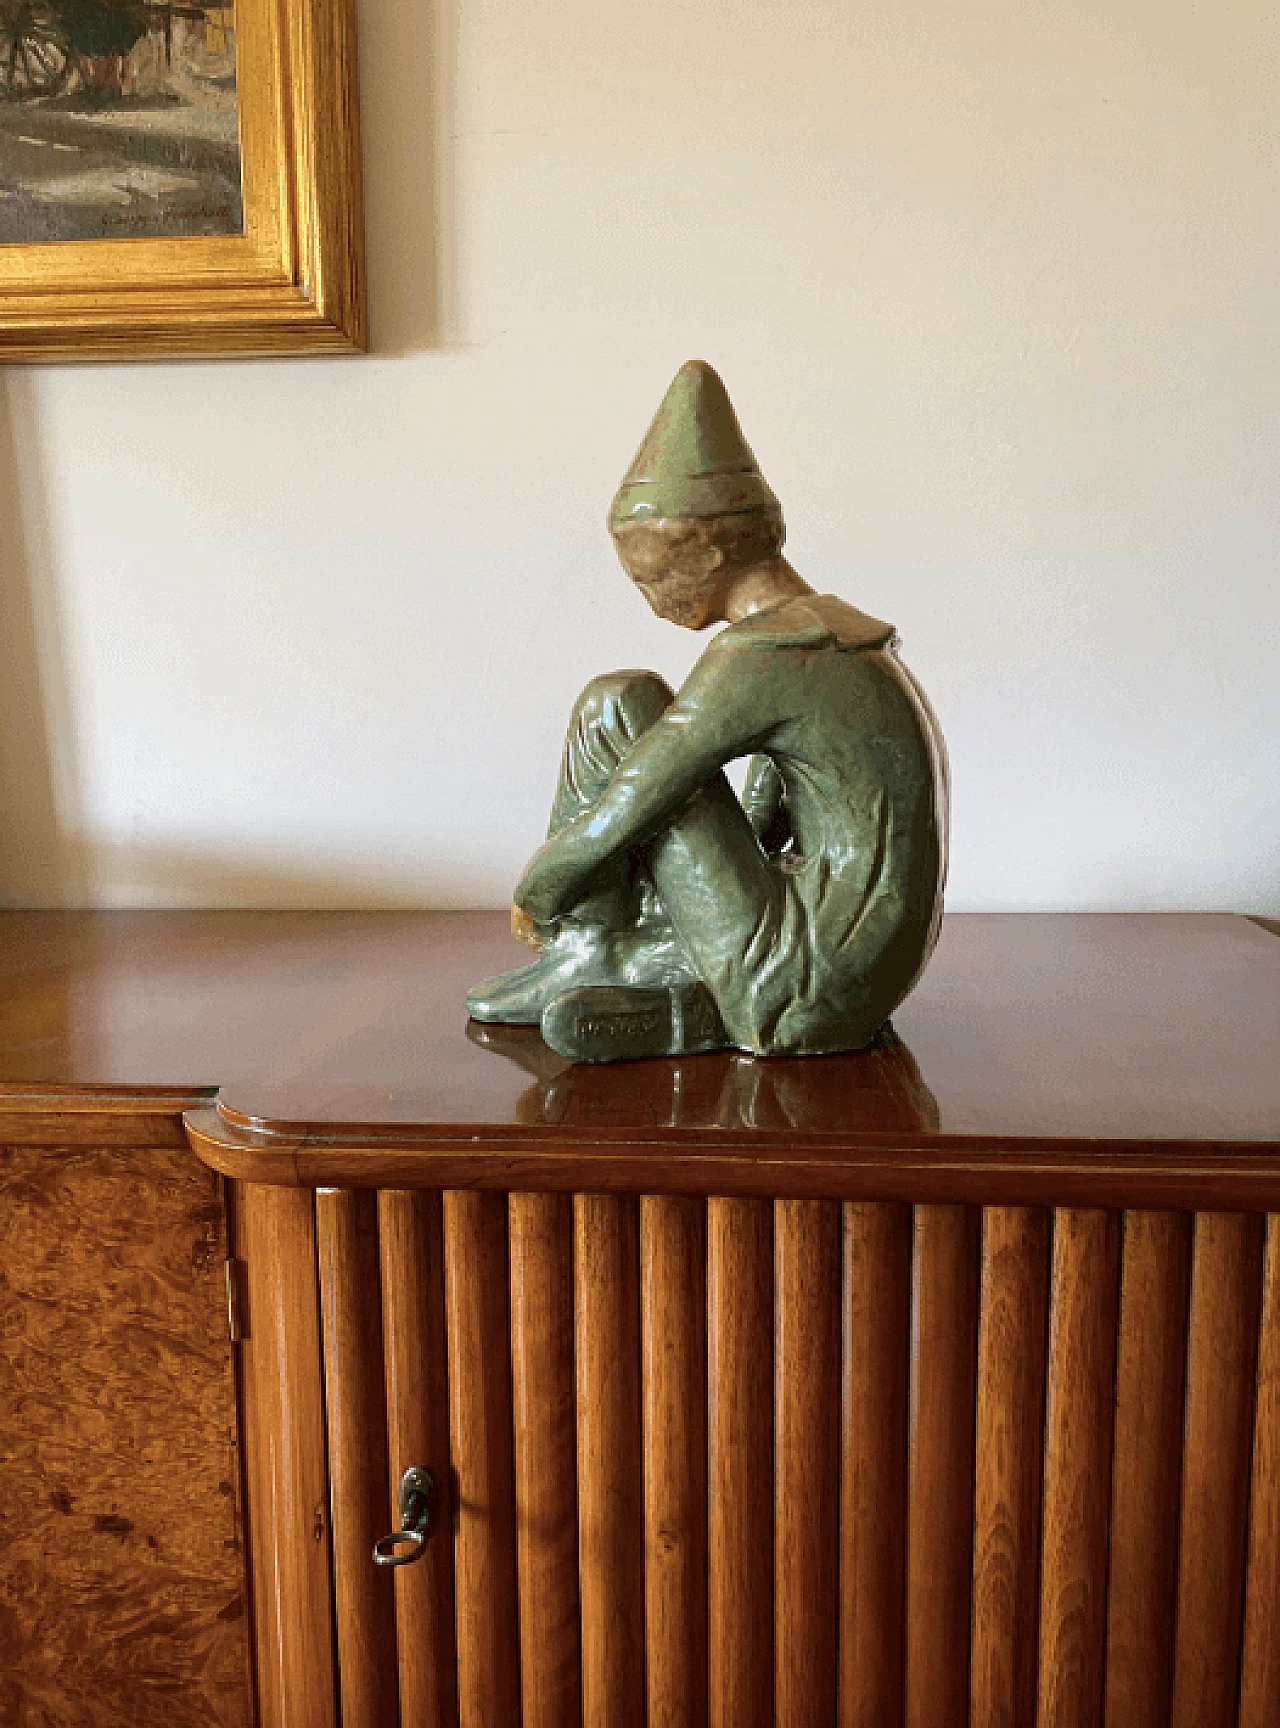 Giordano Tronconi, Seated boy, green ceramic figure from Faenza, 1950s 51